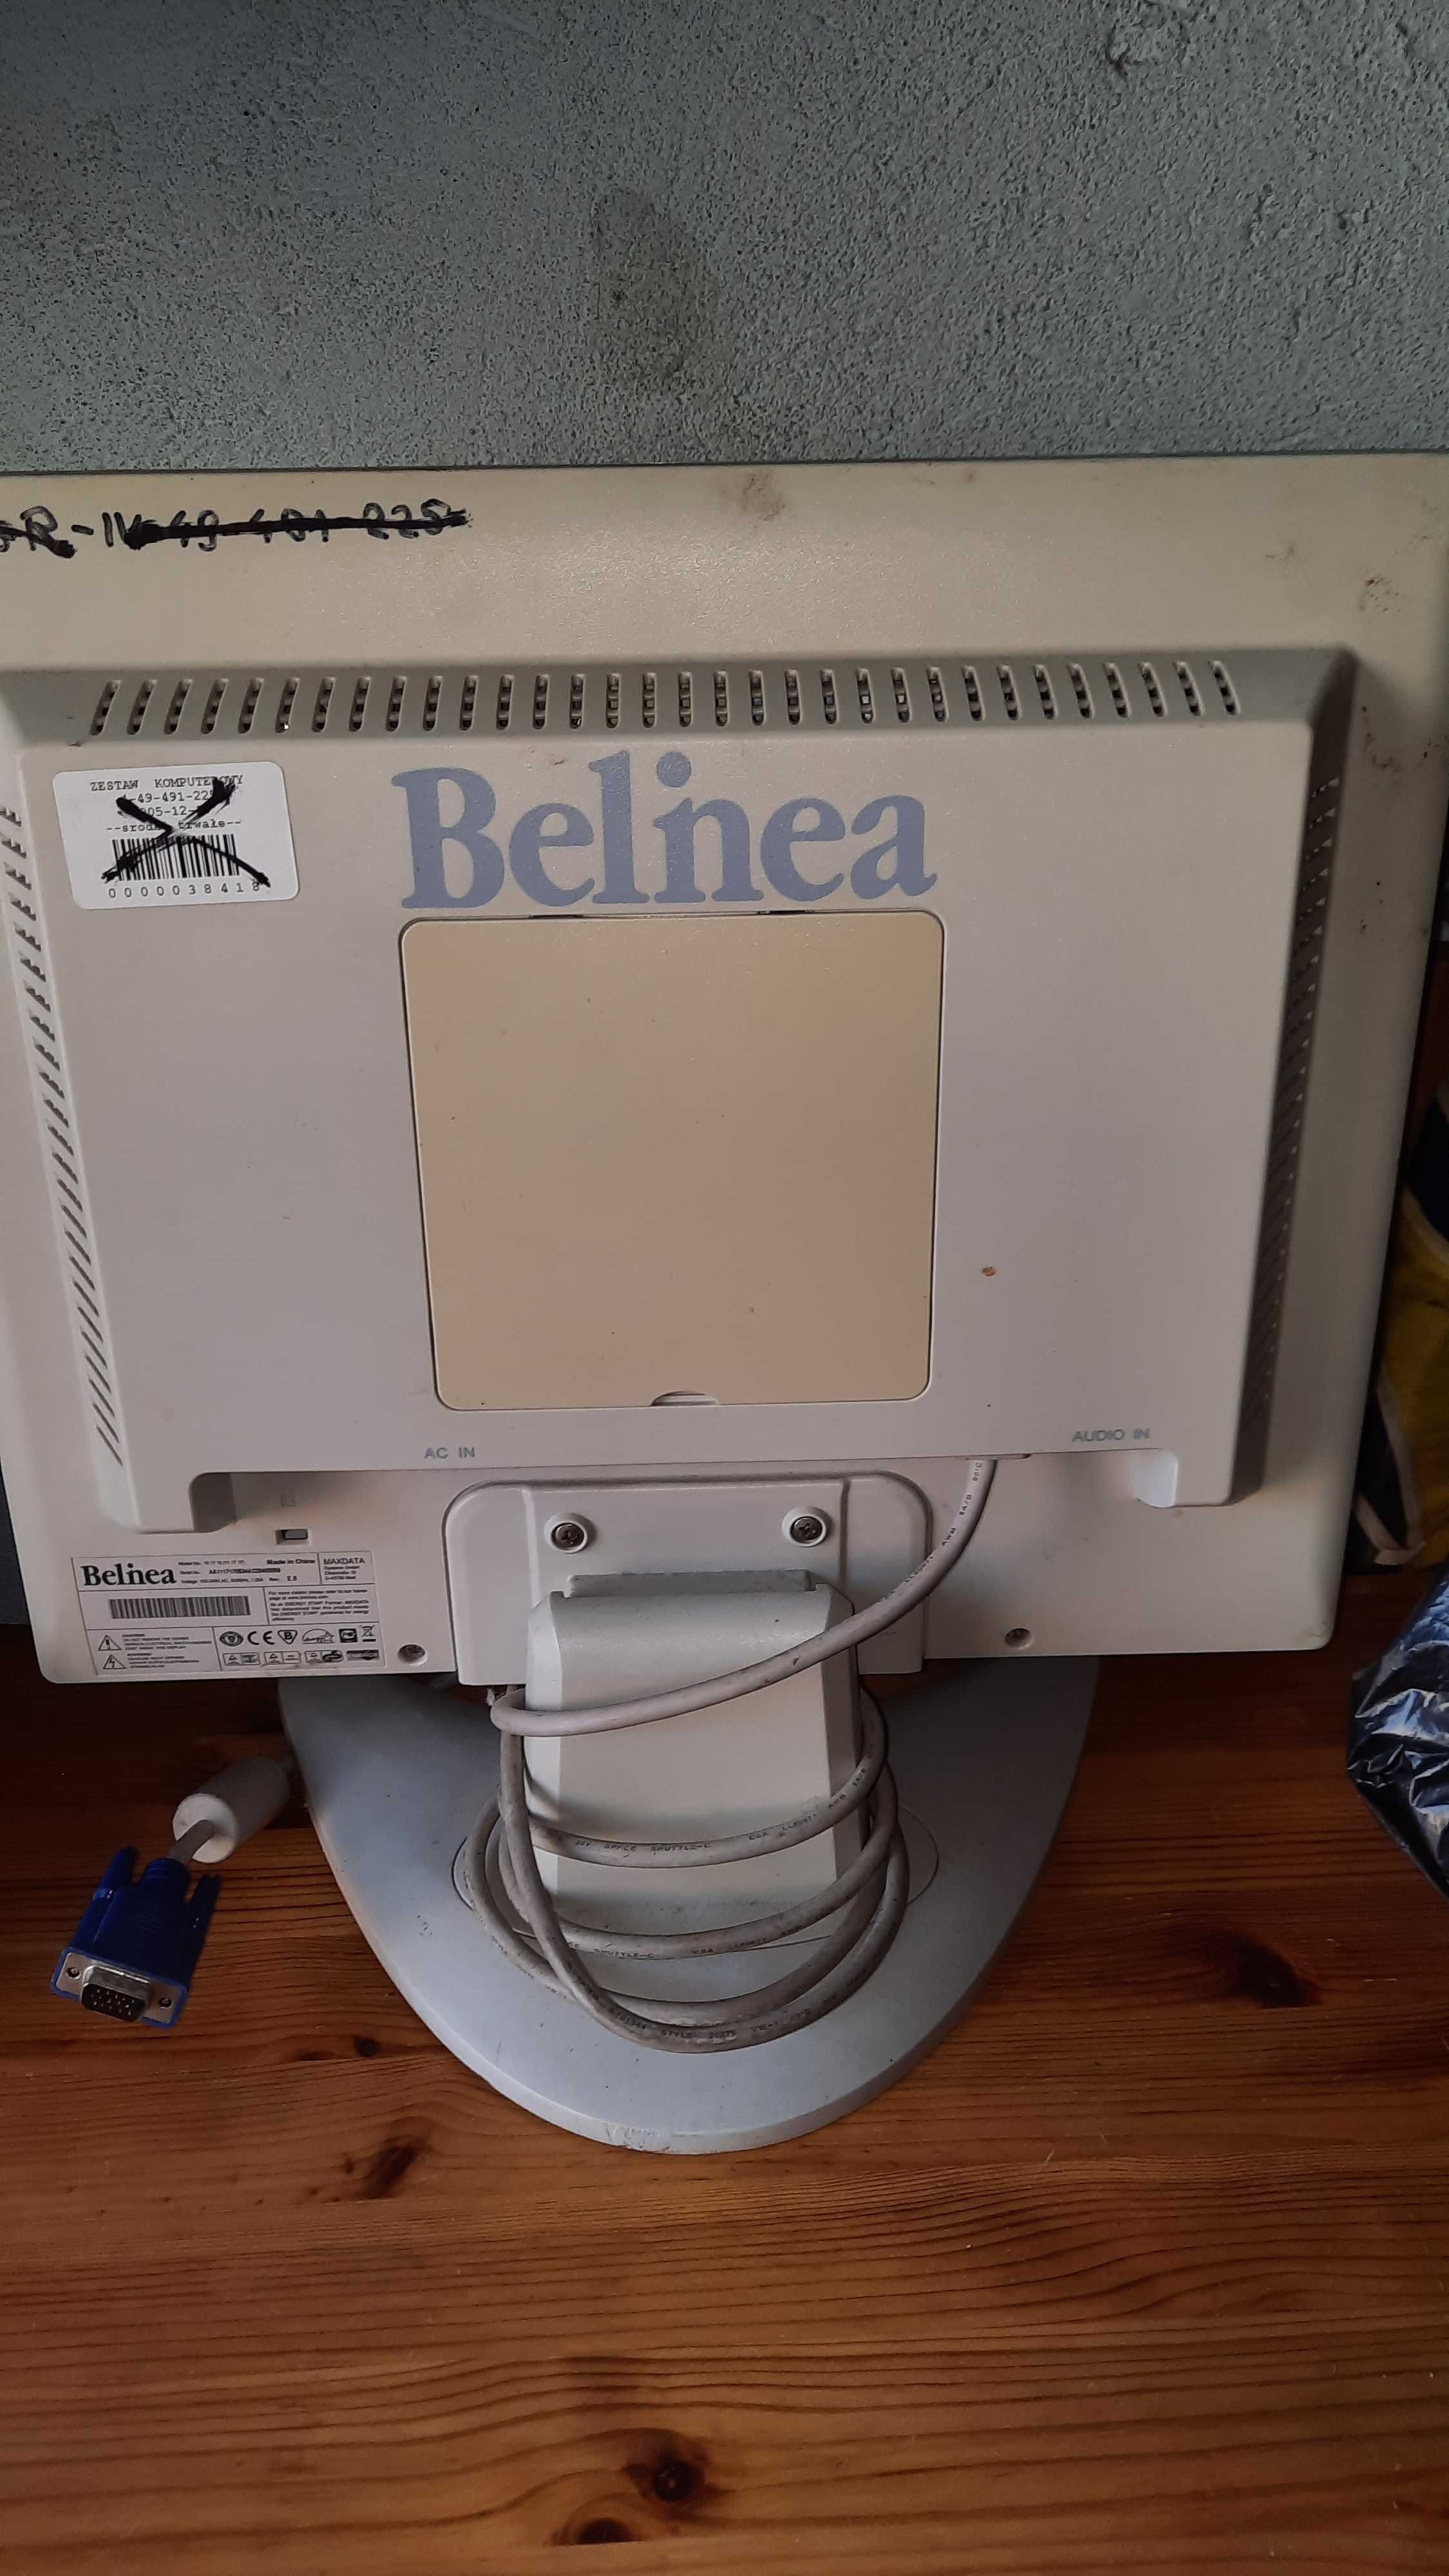 Monitor Belnea lekki, drukarki HP atrament,anteny telewizyjne z kablem